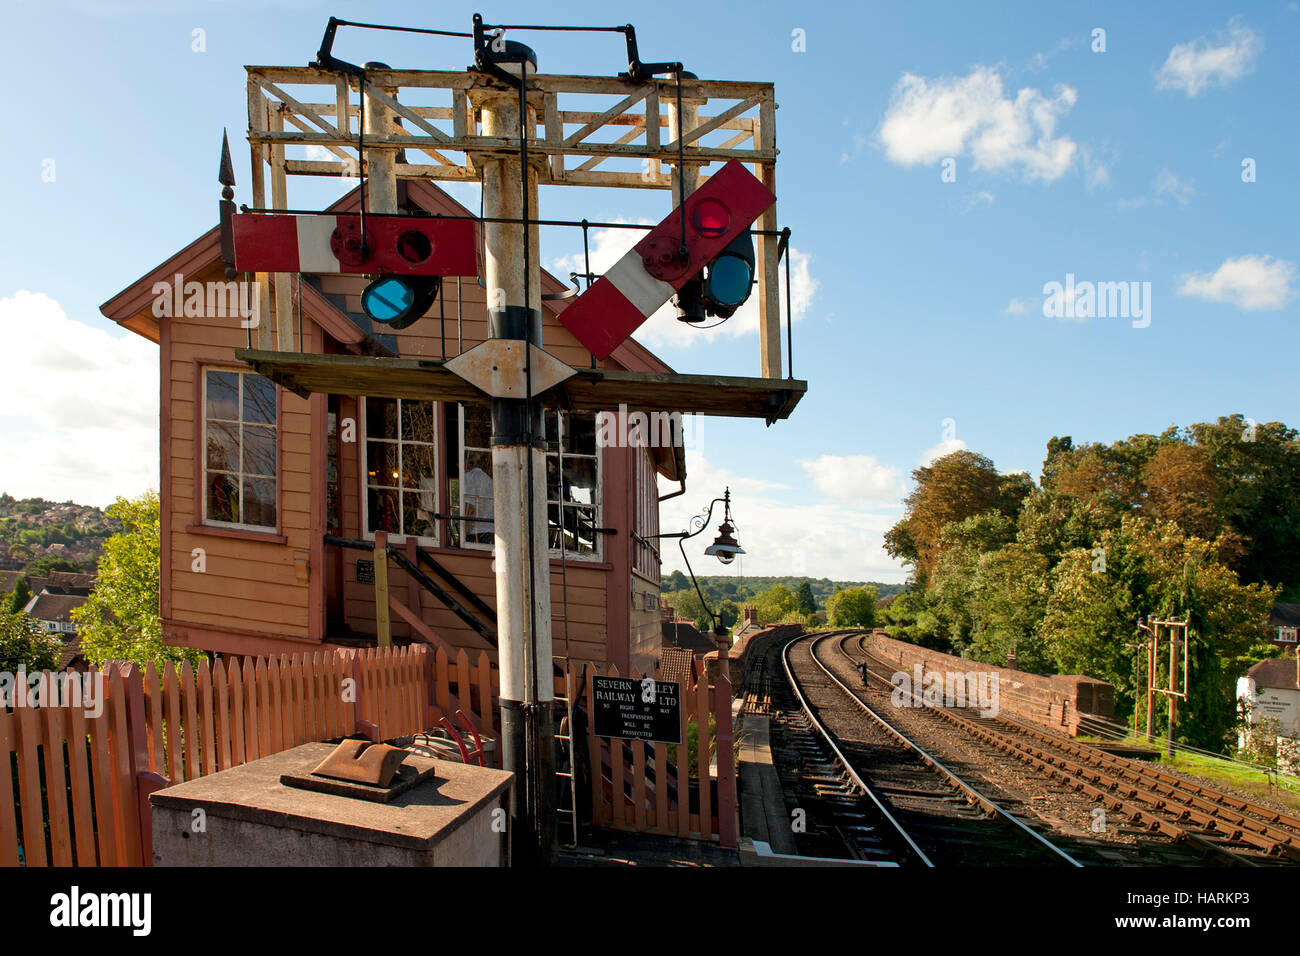 Lower quadrant semaphore signals on the Severn Valley Railway Stock Photo